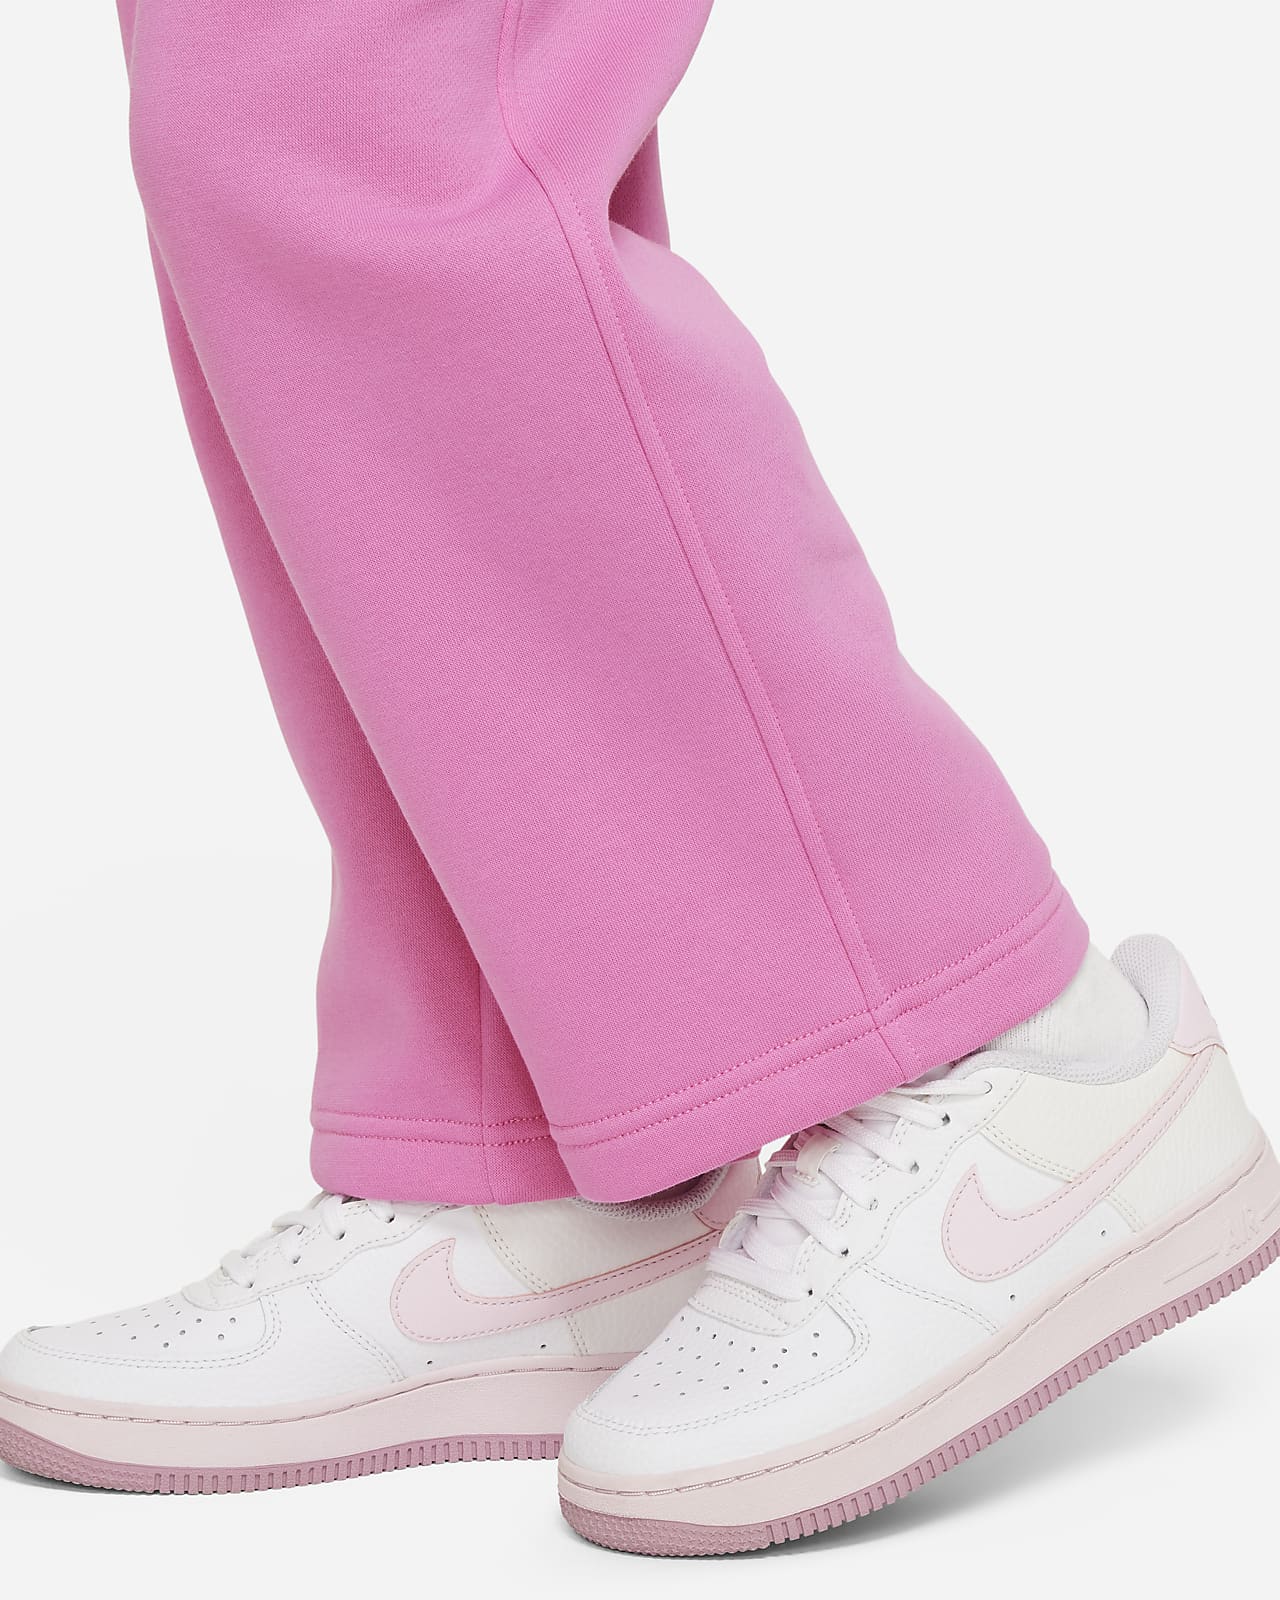 Kids Sport Trousers Pink Black Wide Leg Pants for Girls Teenage